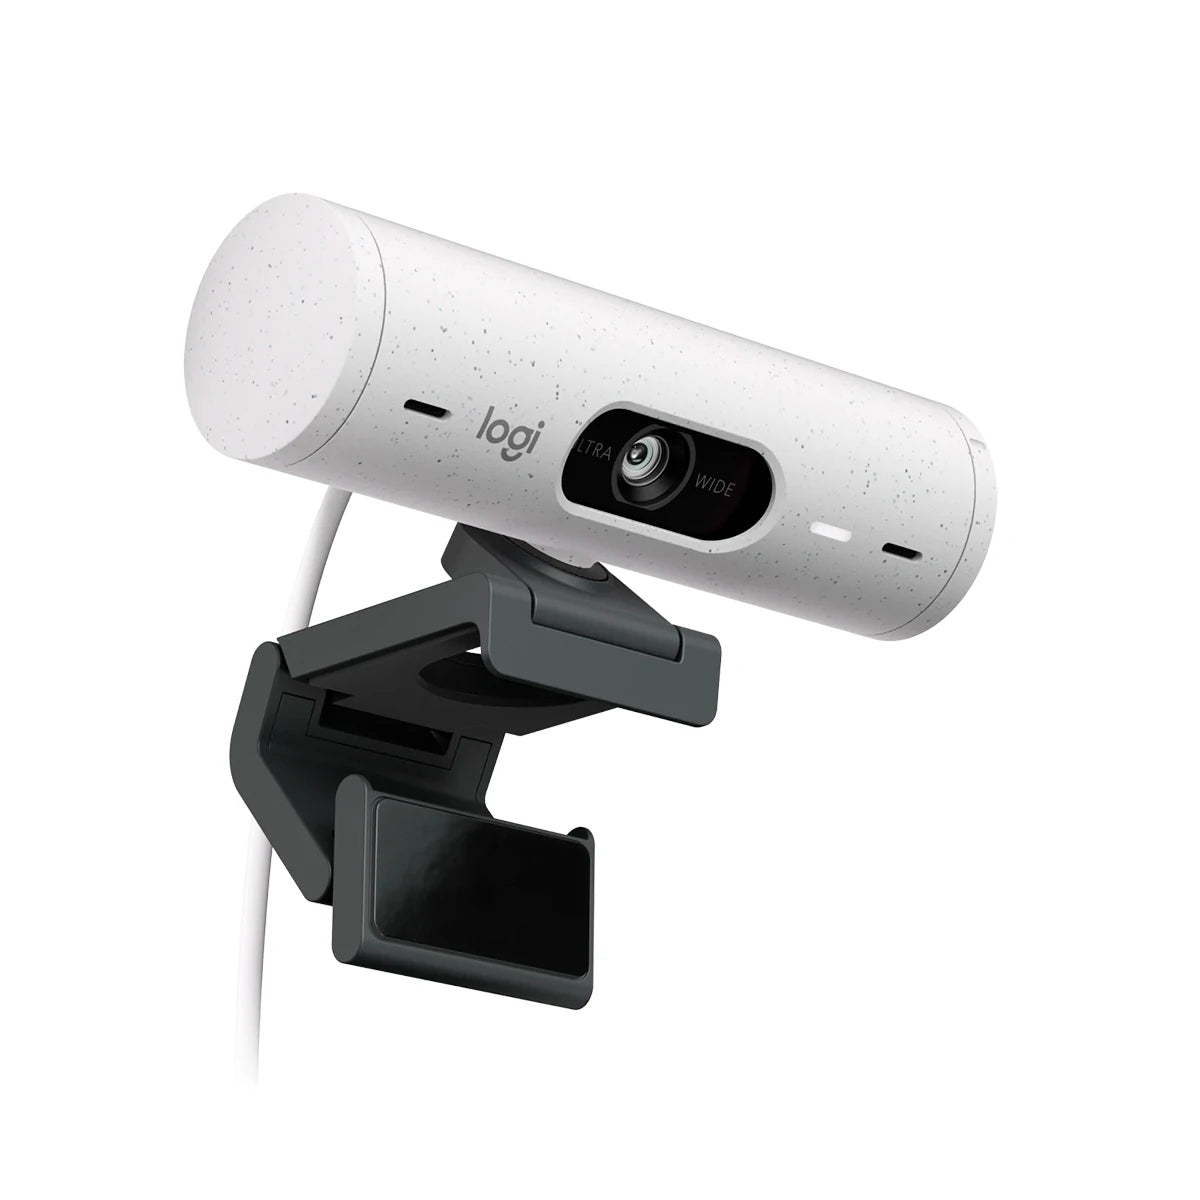 Camara Video Conferencing Logitech Brio 500 FHD 1080 Correc. Ilum. Encuadre Auto. White